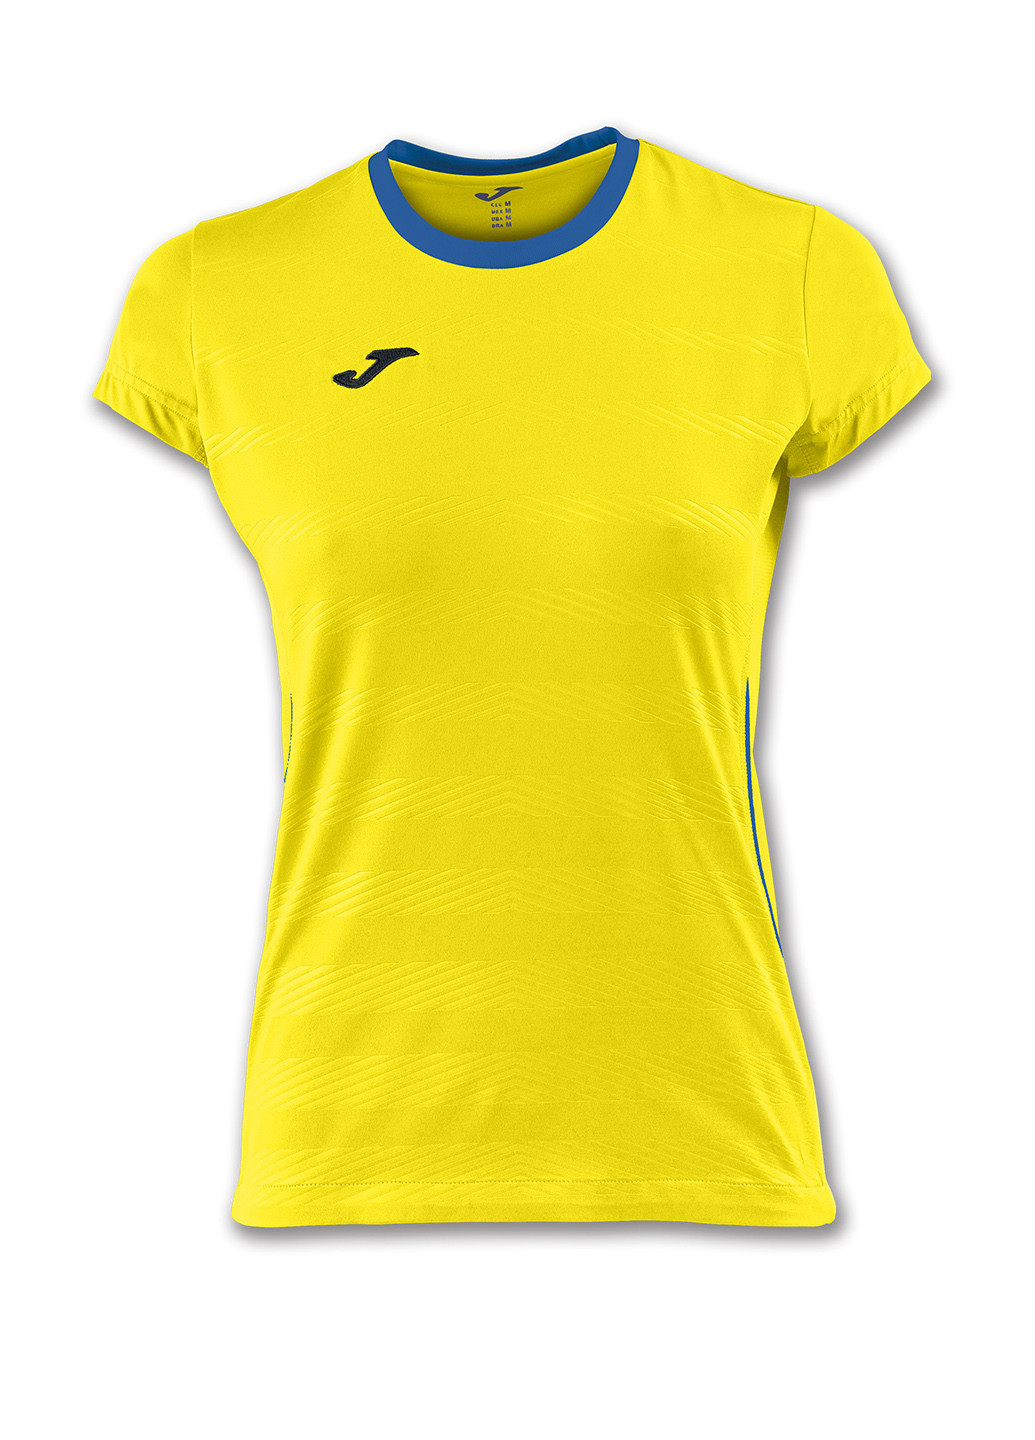 Желтая летняя футболка с коротким рукавом Joma